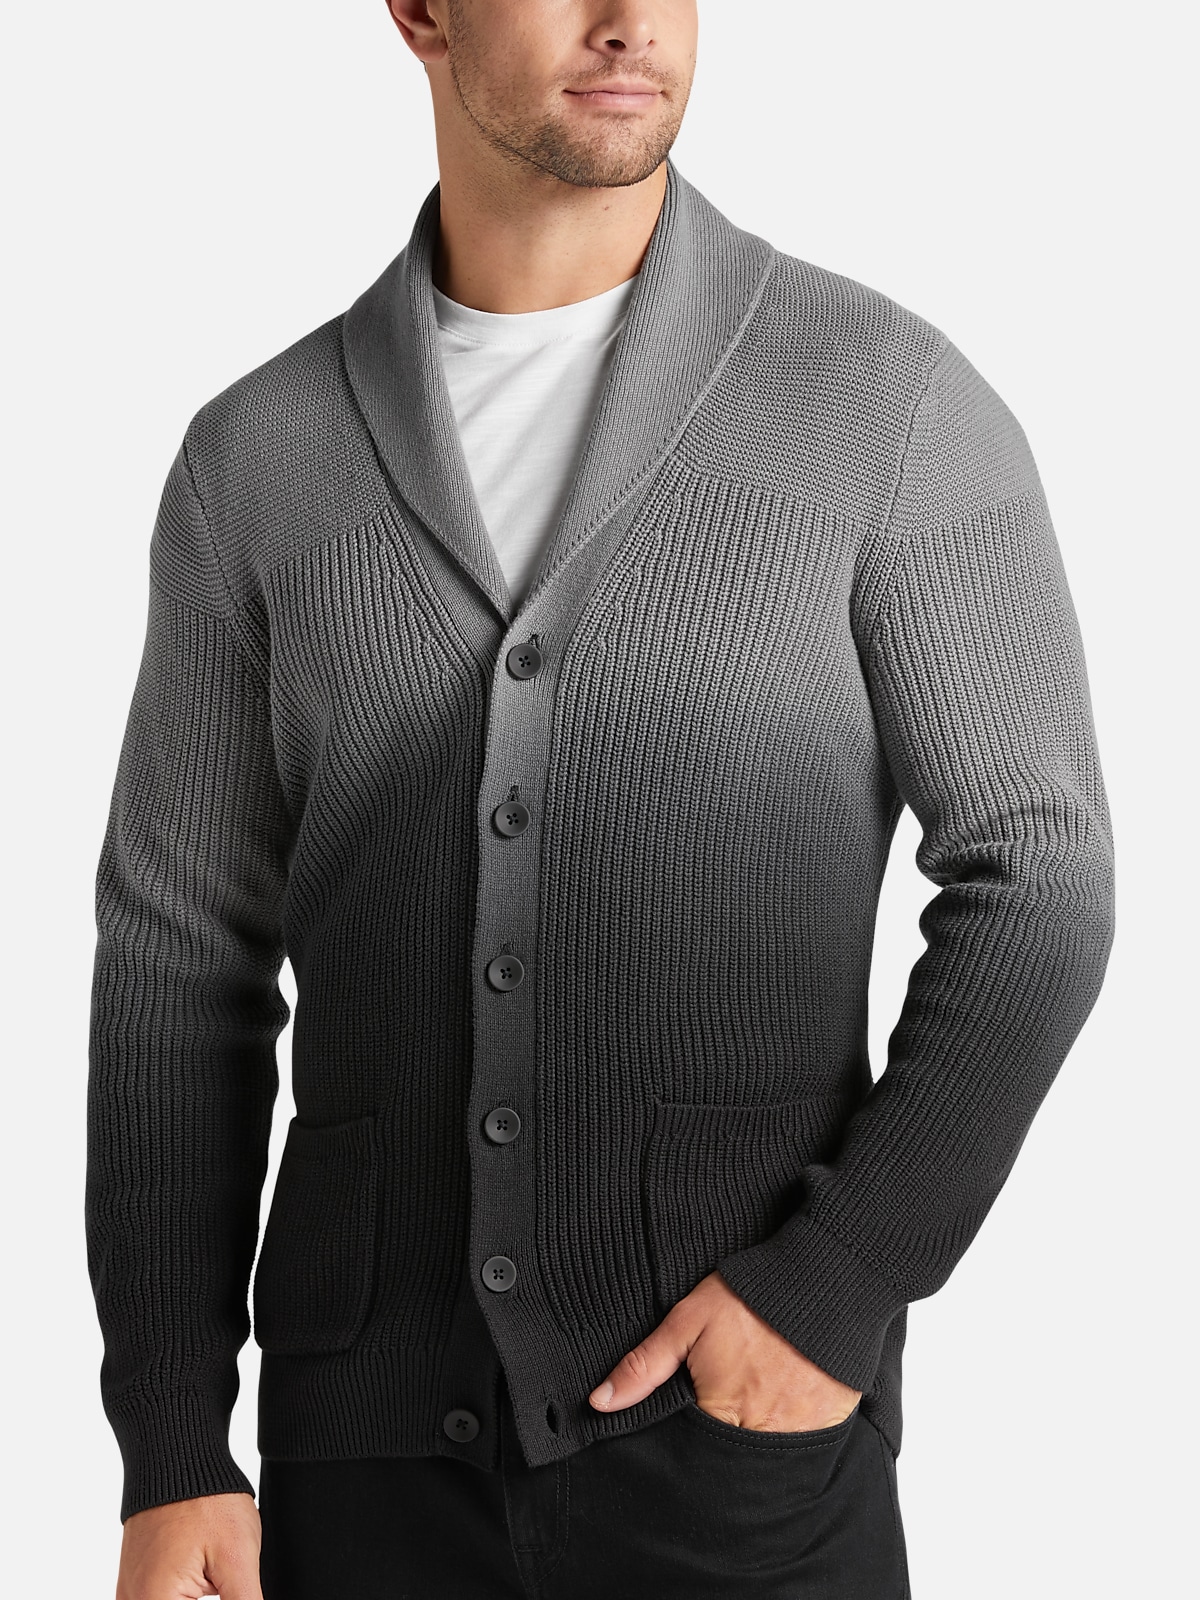 Fesfesfes Fashion Men Solid Stand Collar Sleeveless Cardigan